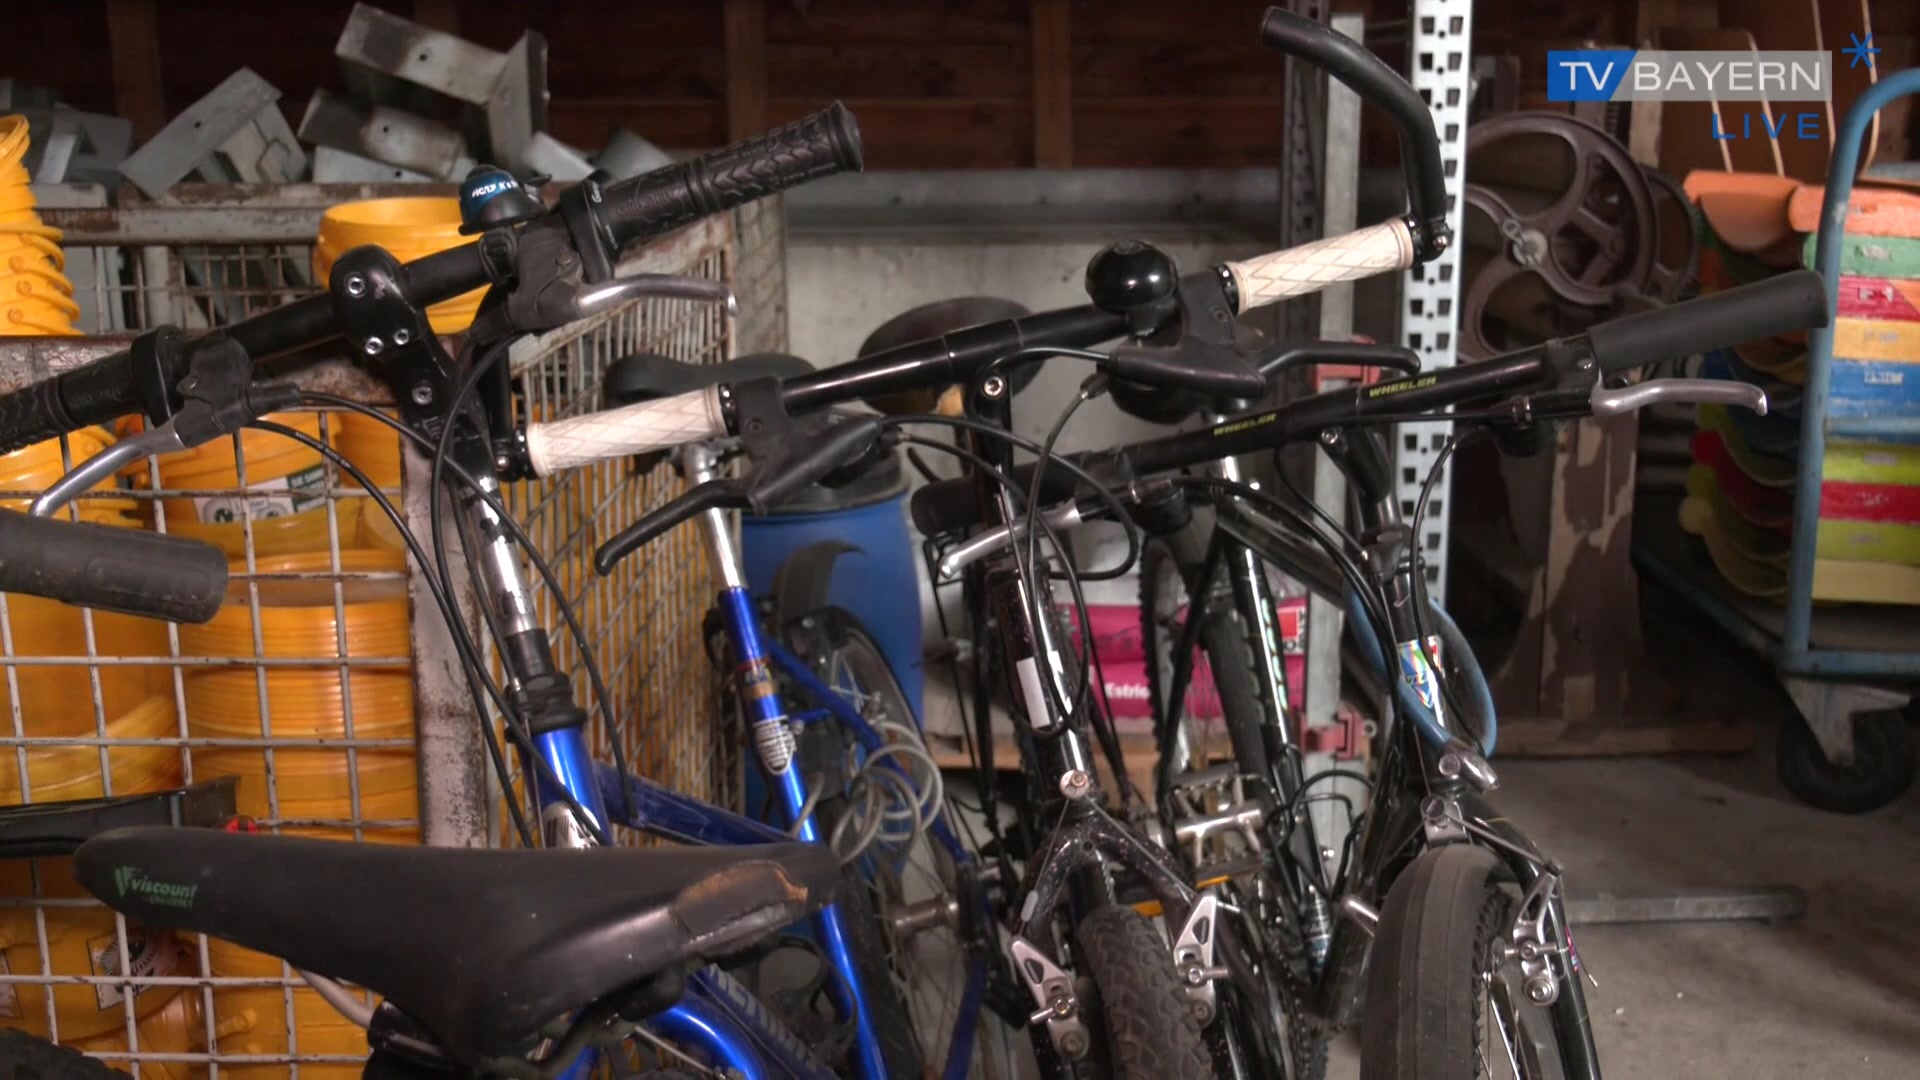 Reanimated Bikes in Straubing TV BAYERN LIVE